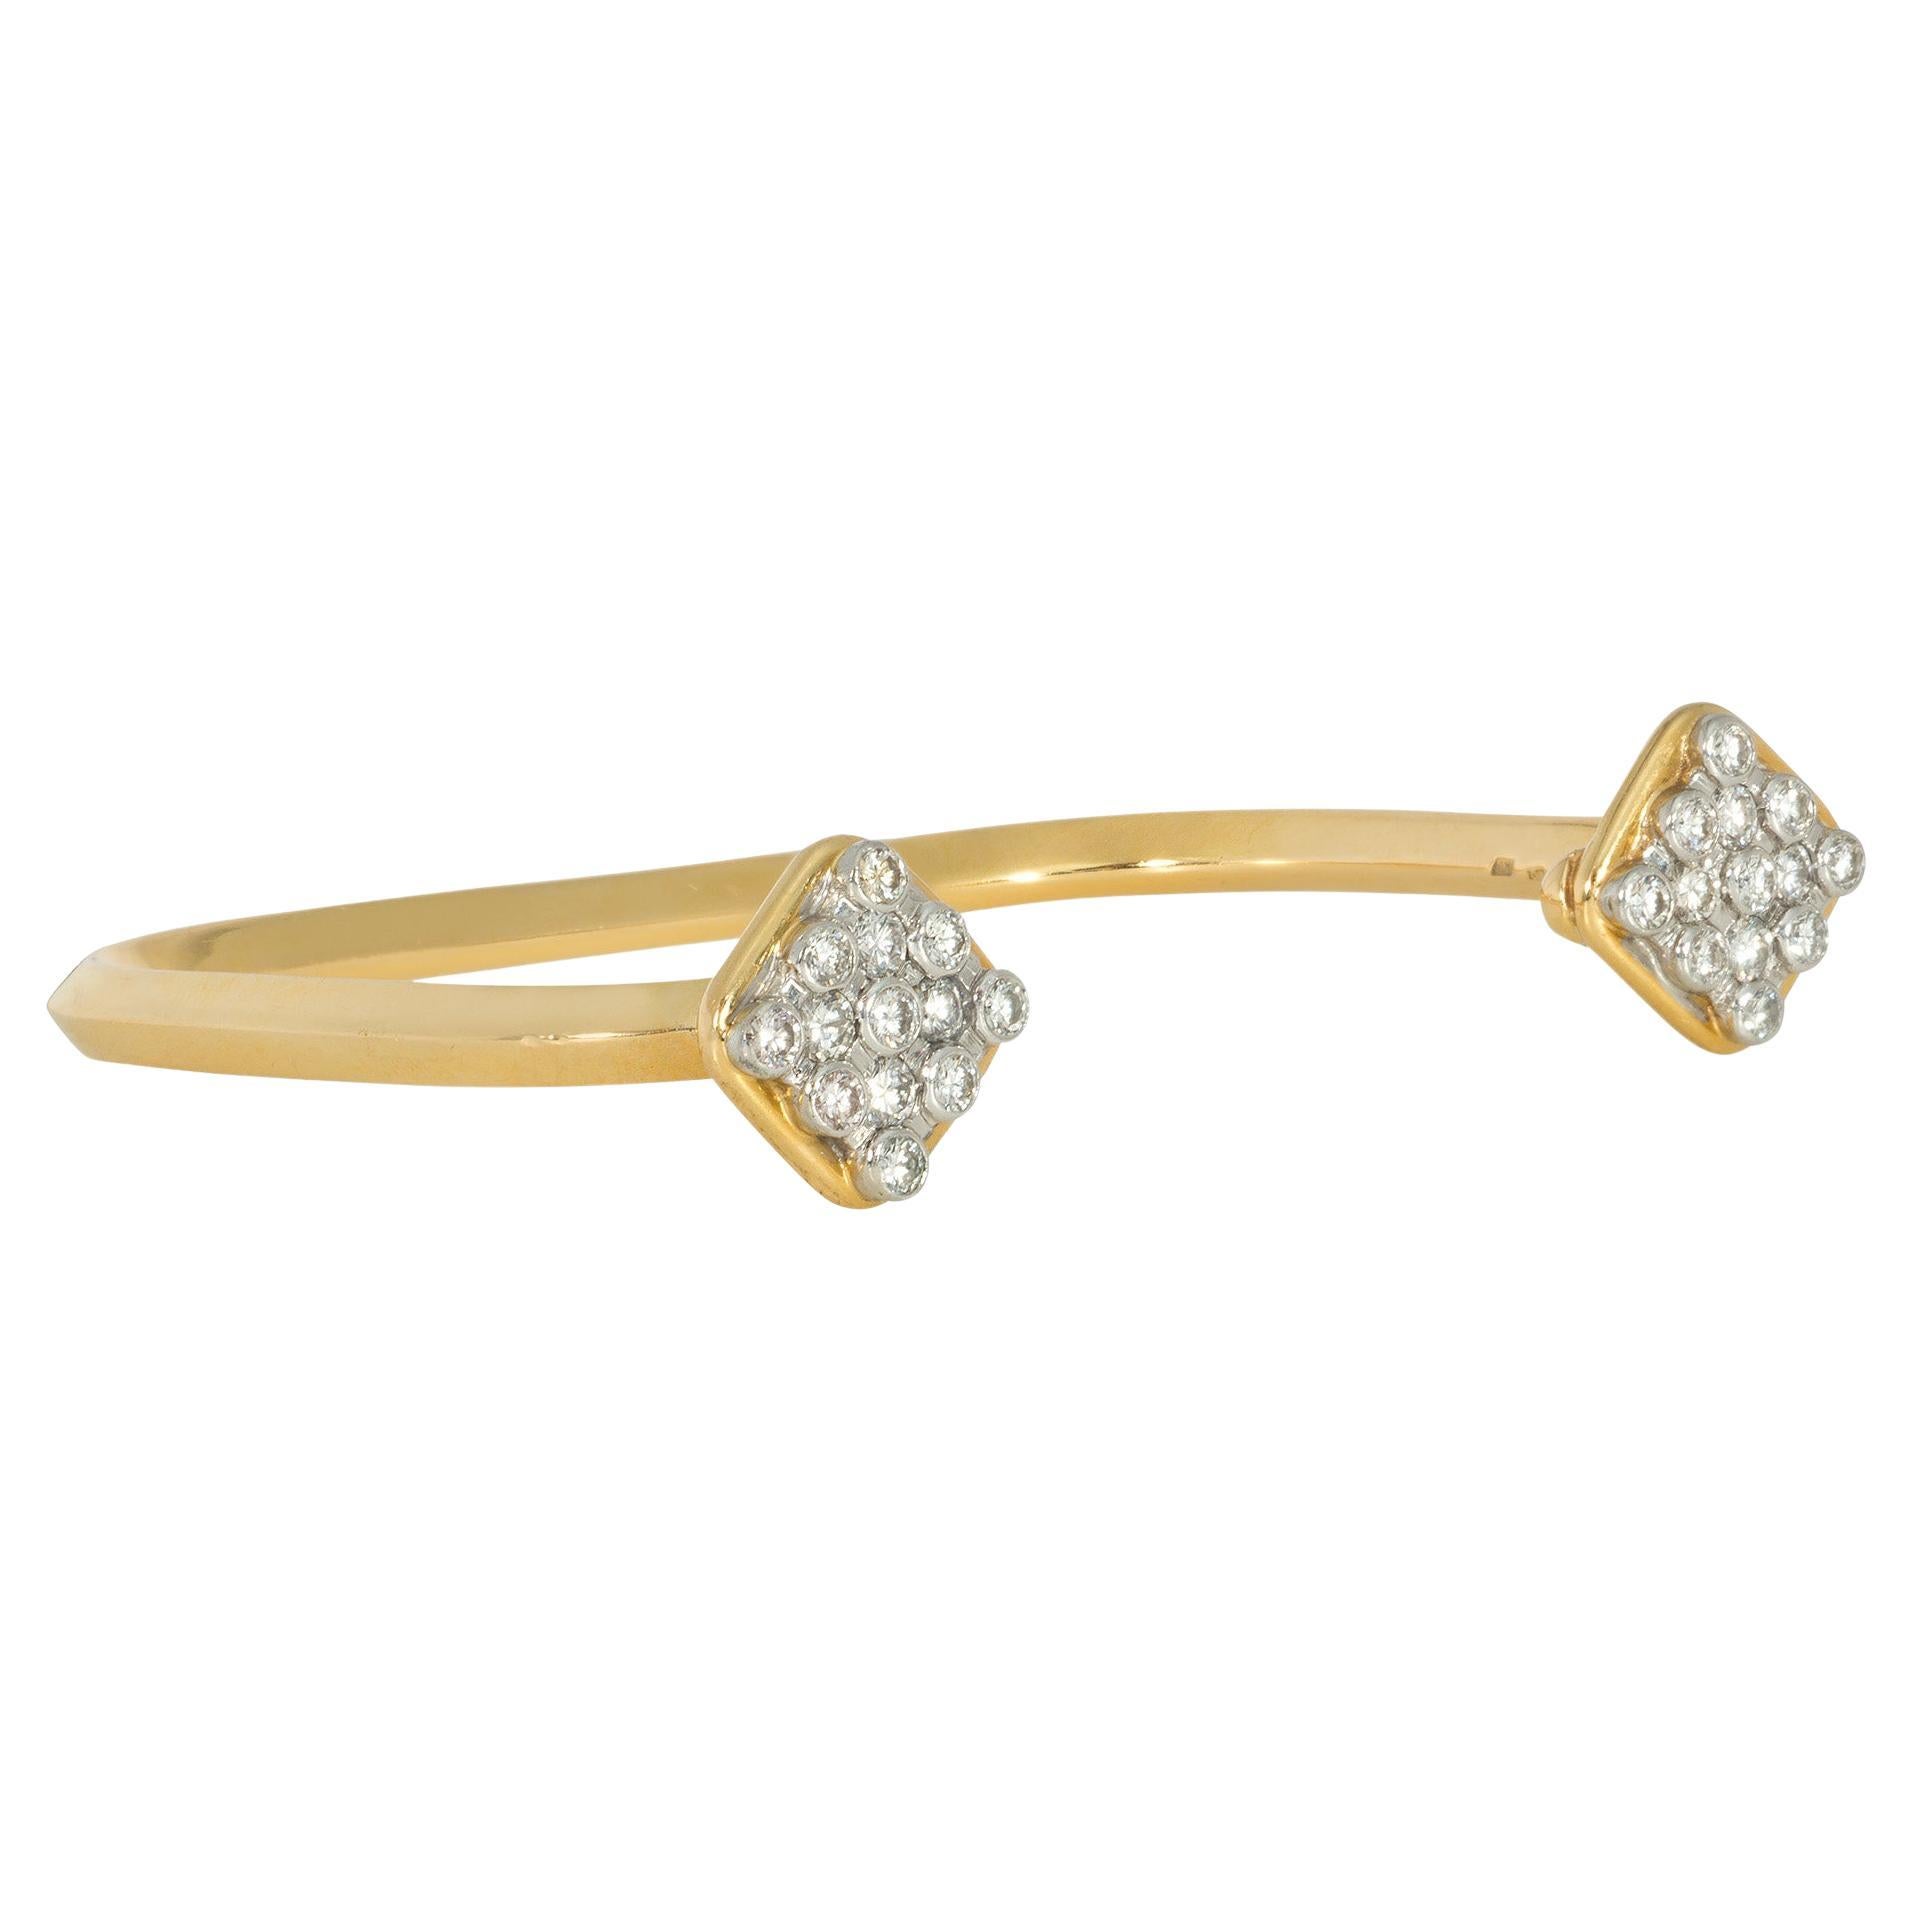 French 1970s Gold Geometric Cuff Bracelet with Diamond-Set Terminals